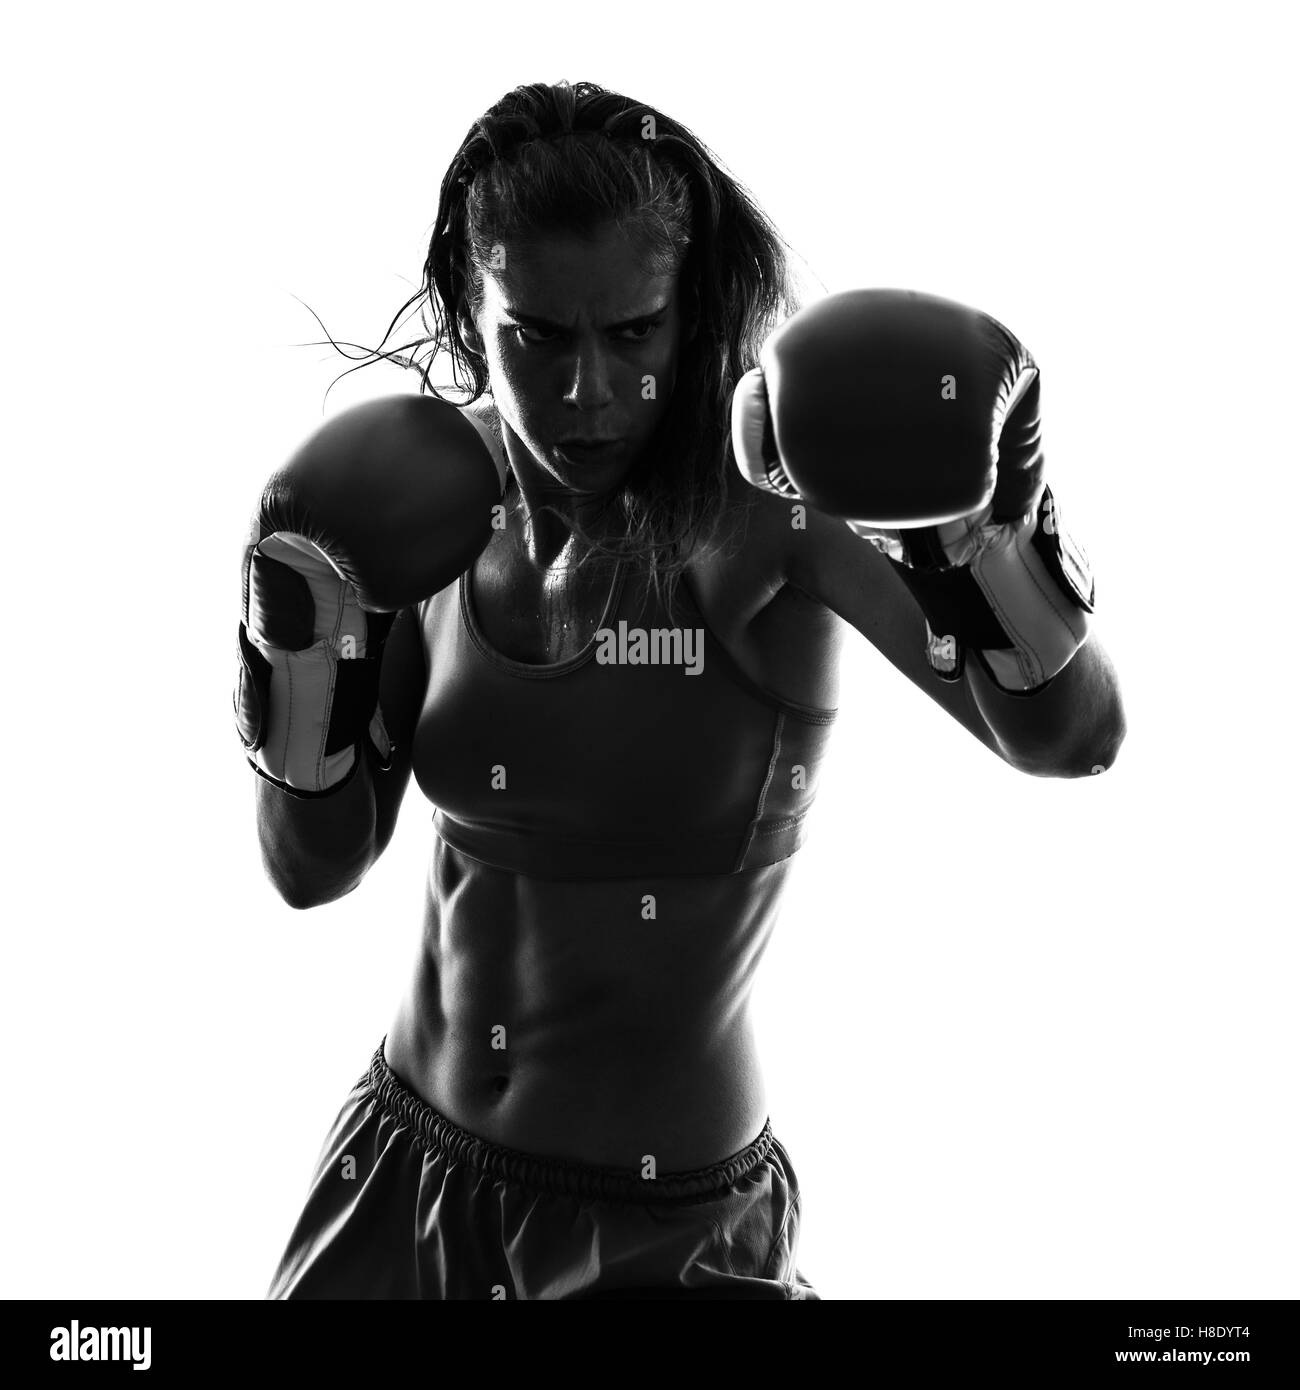 Kickboxing Black and White Stock Photos & Images - Alamy